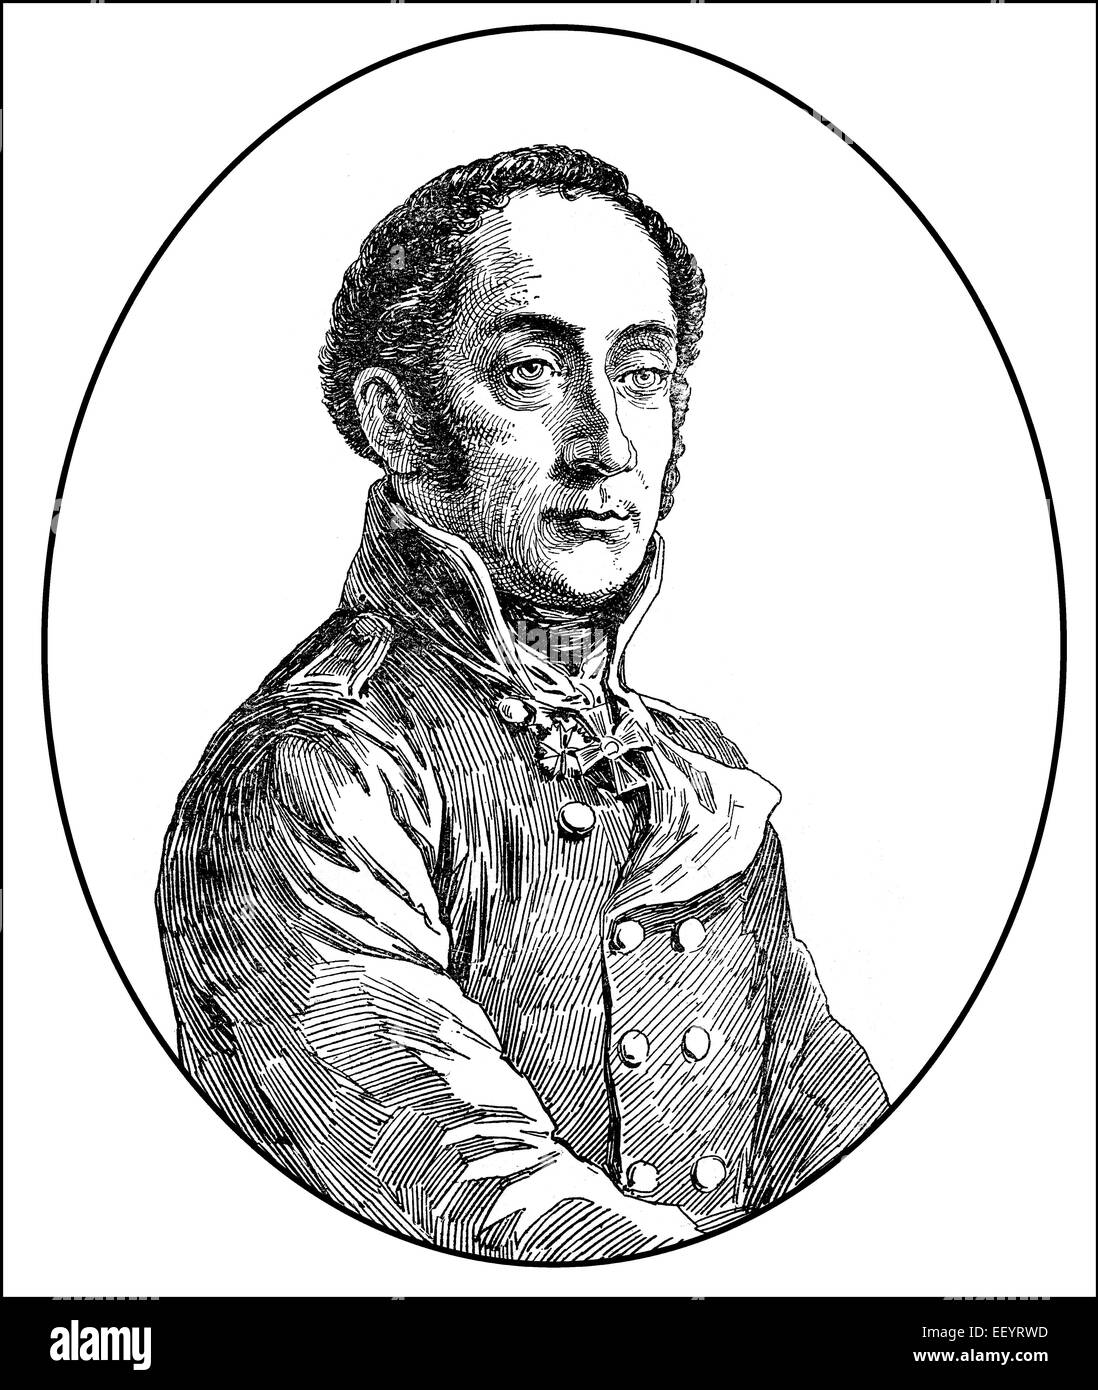 Bogislav Friedrich Emanuel Graf von Tauentzien Wittenberg, 1760 - 1824, un général prussien des guerres napoléoniennes, Banque D'Images